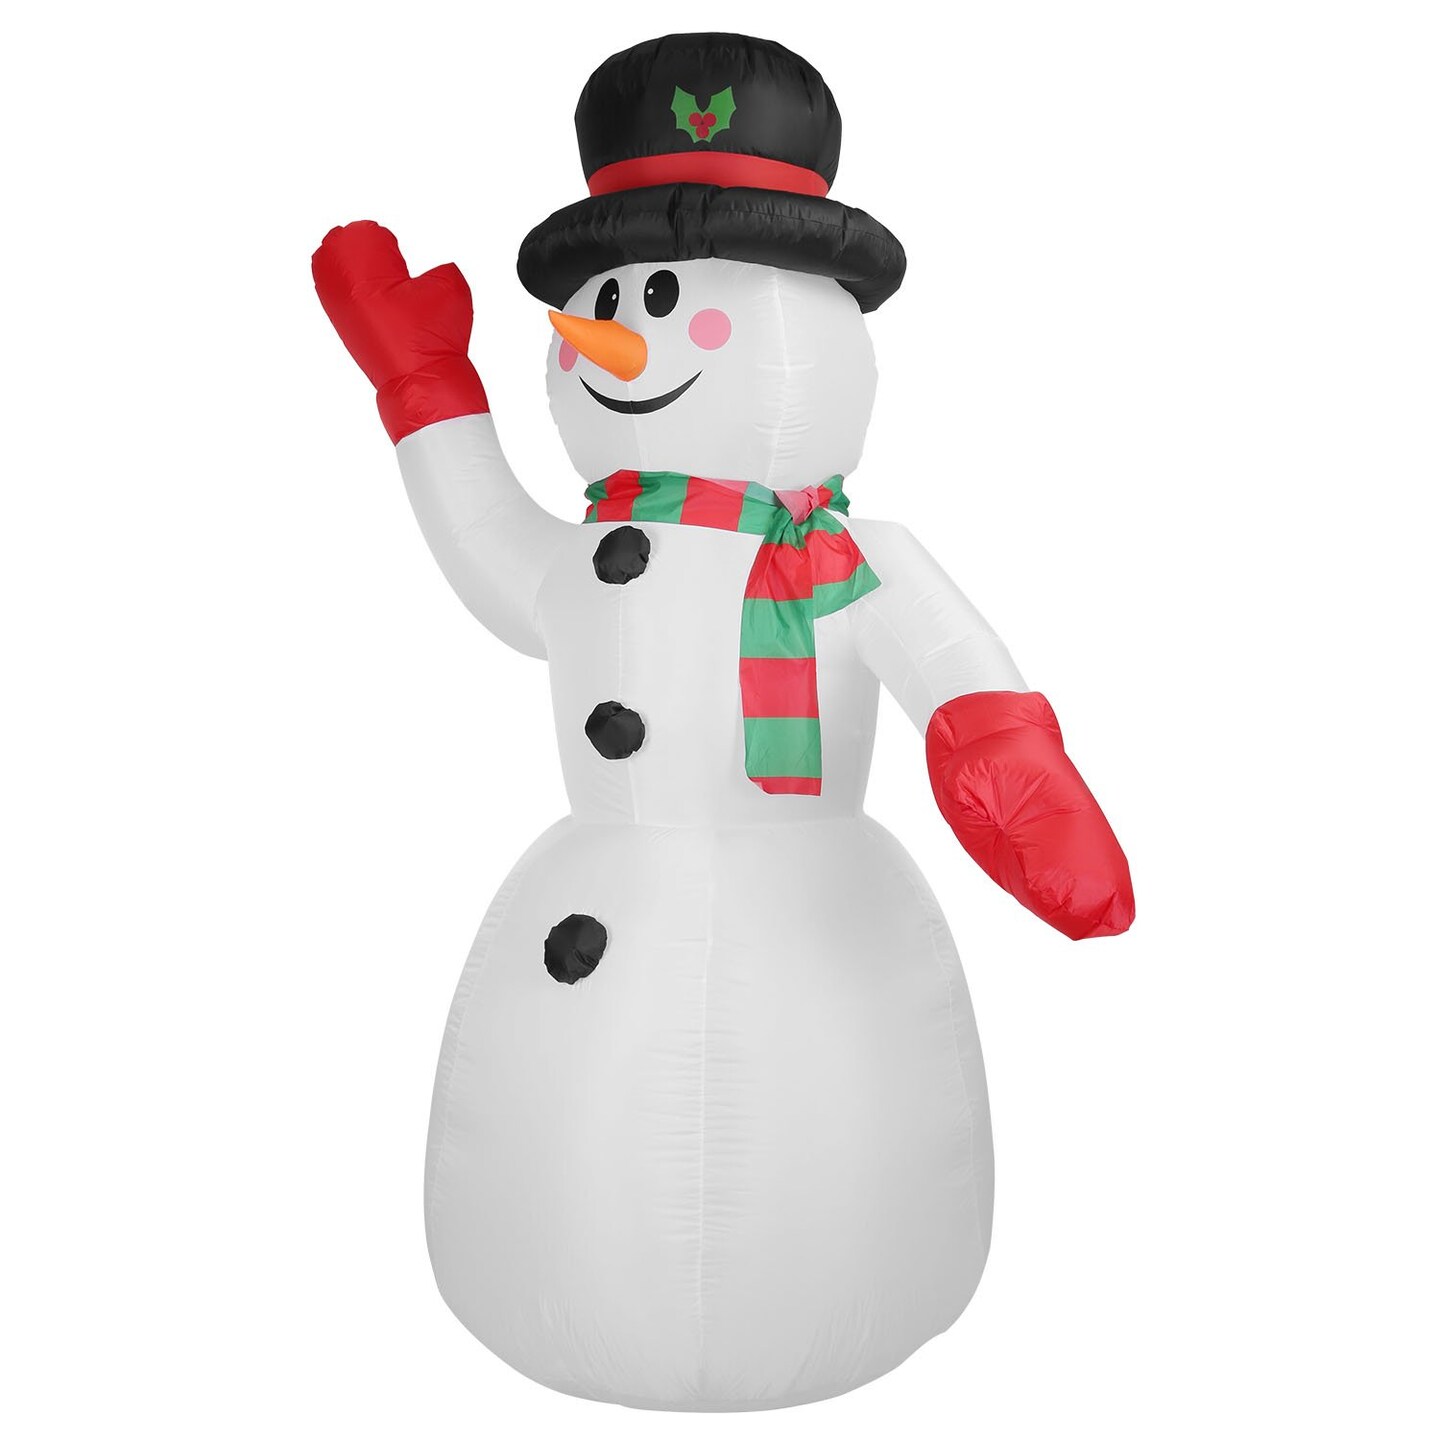 Global Phoenix 7.9FT Christmas Inflatable Giant Snowman Blow up Light up Snowman  IPX4 Waterproof